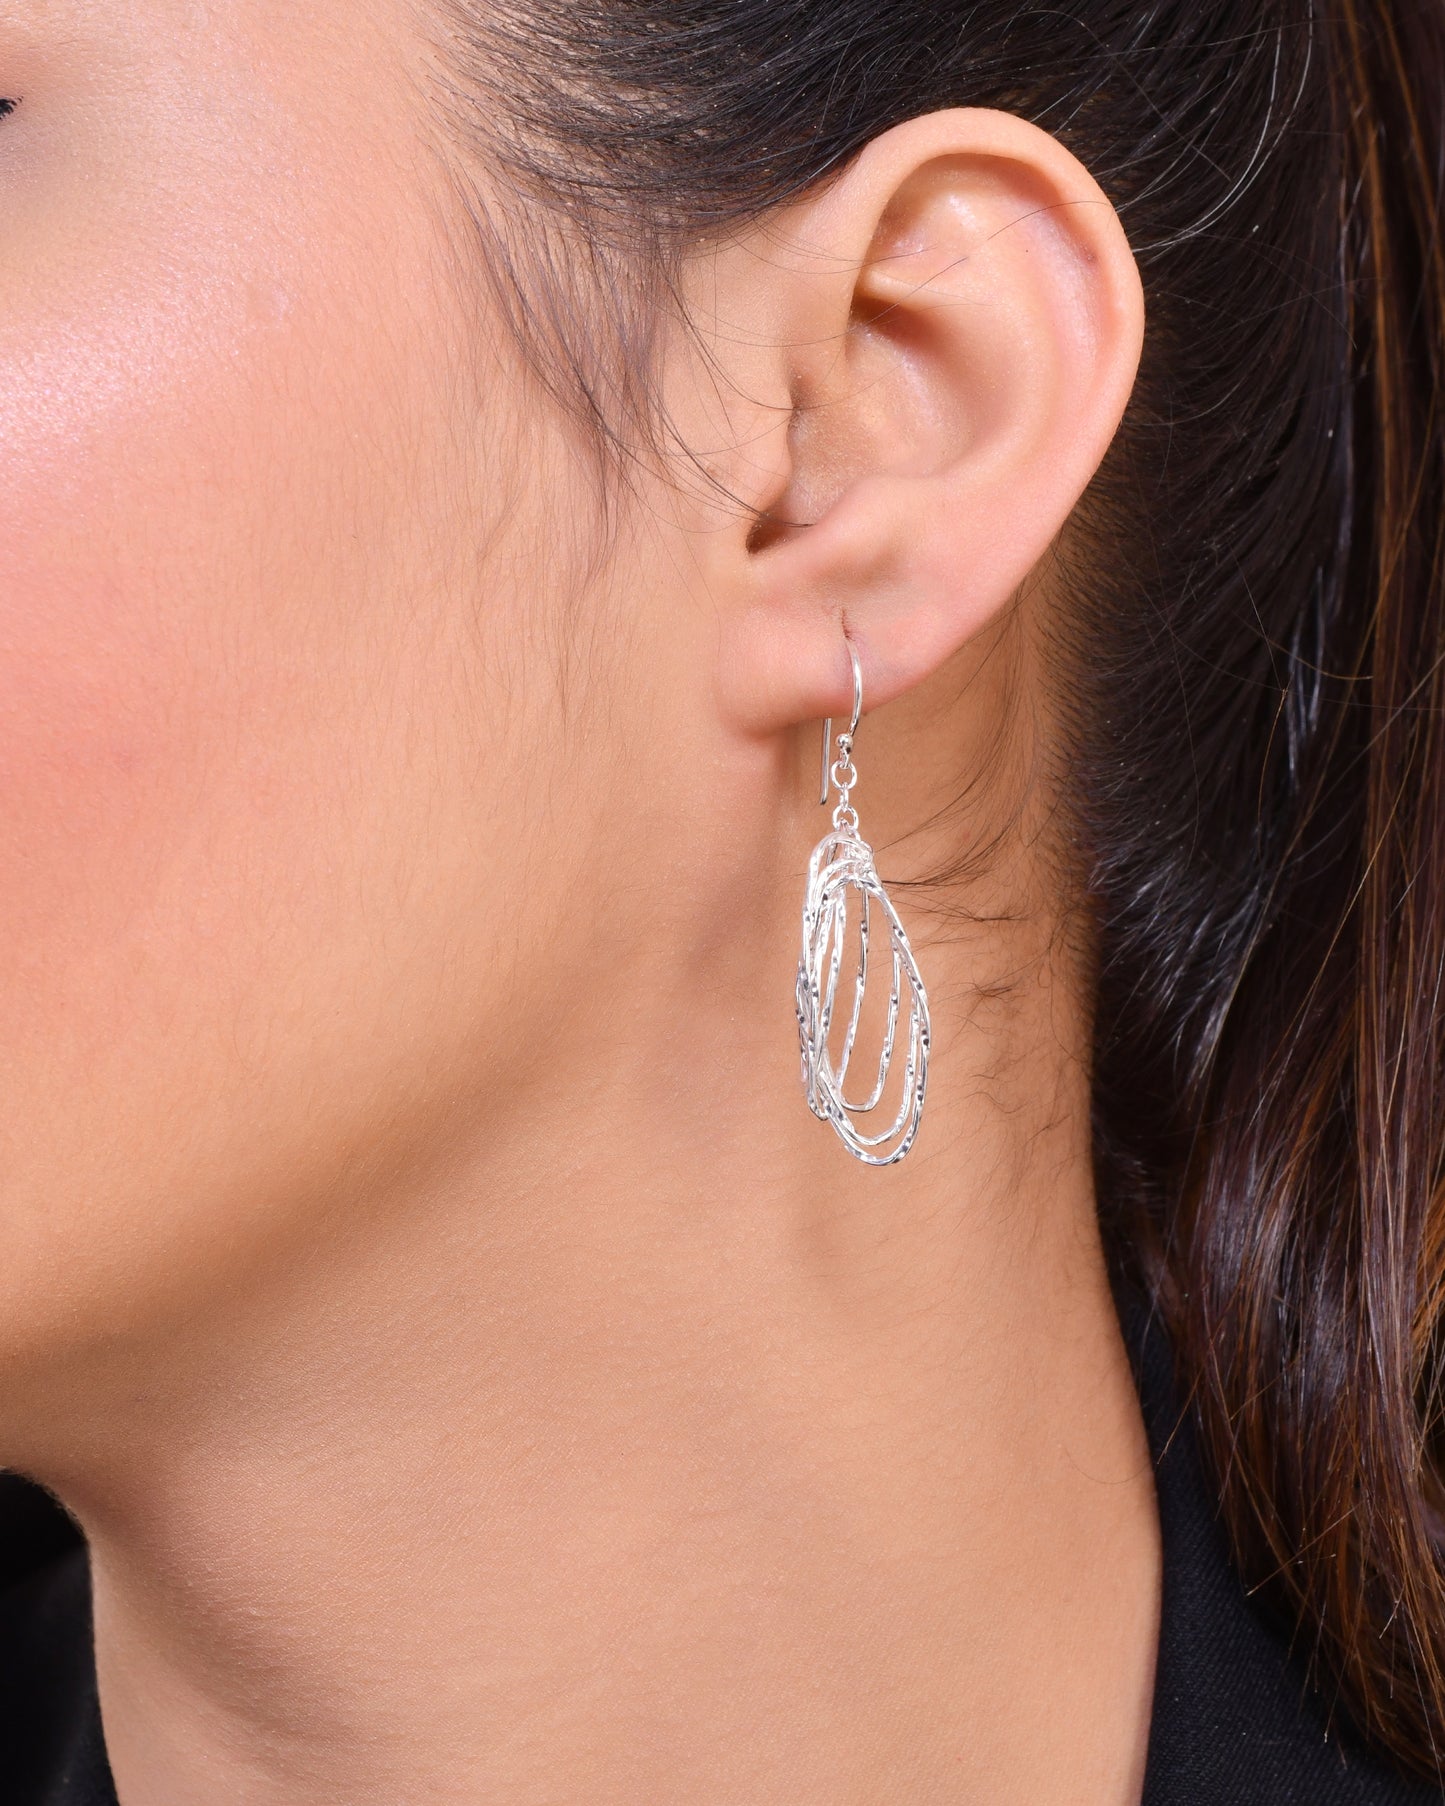 925 Sterling Silver Contemporary Drop Earrings For Women & Girls